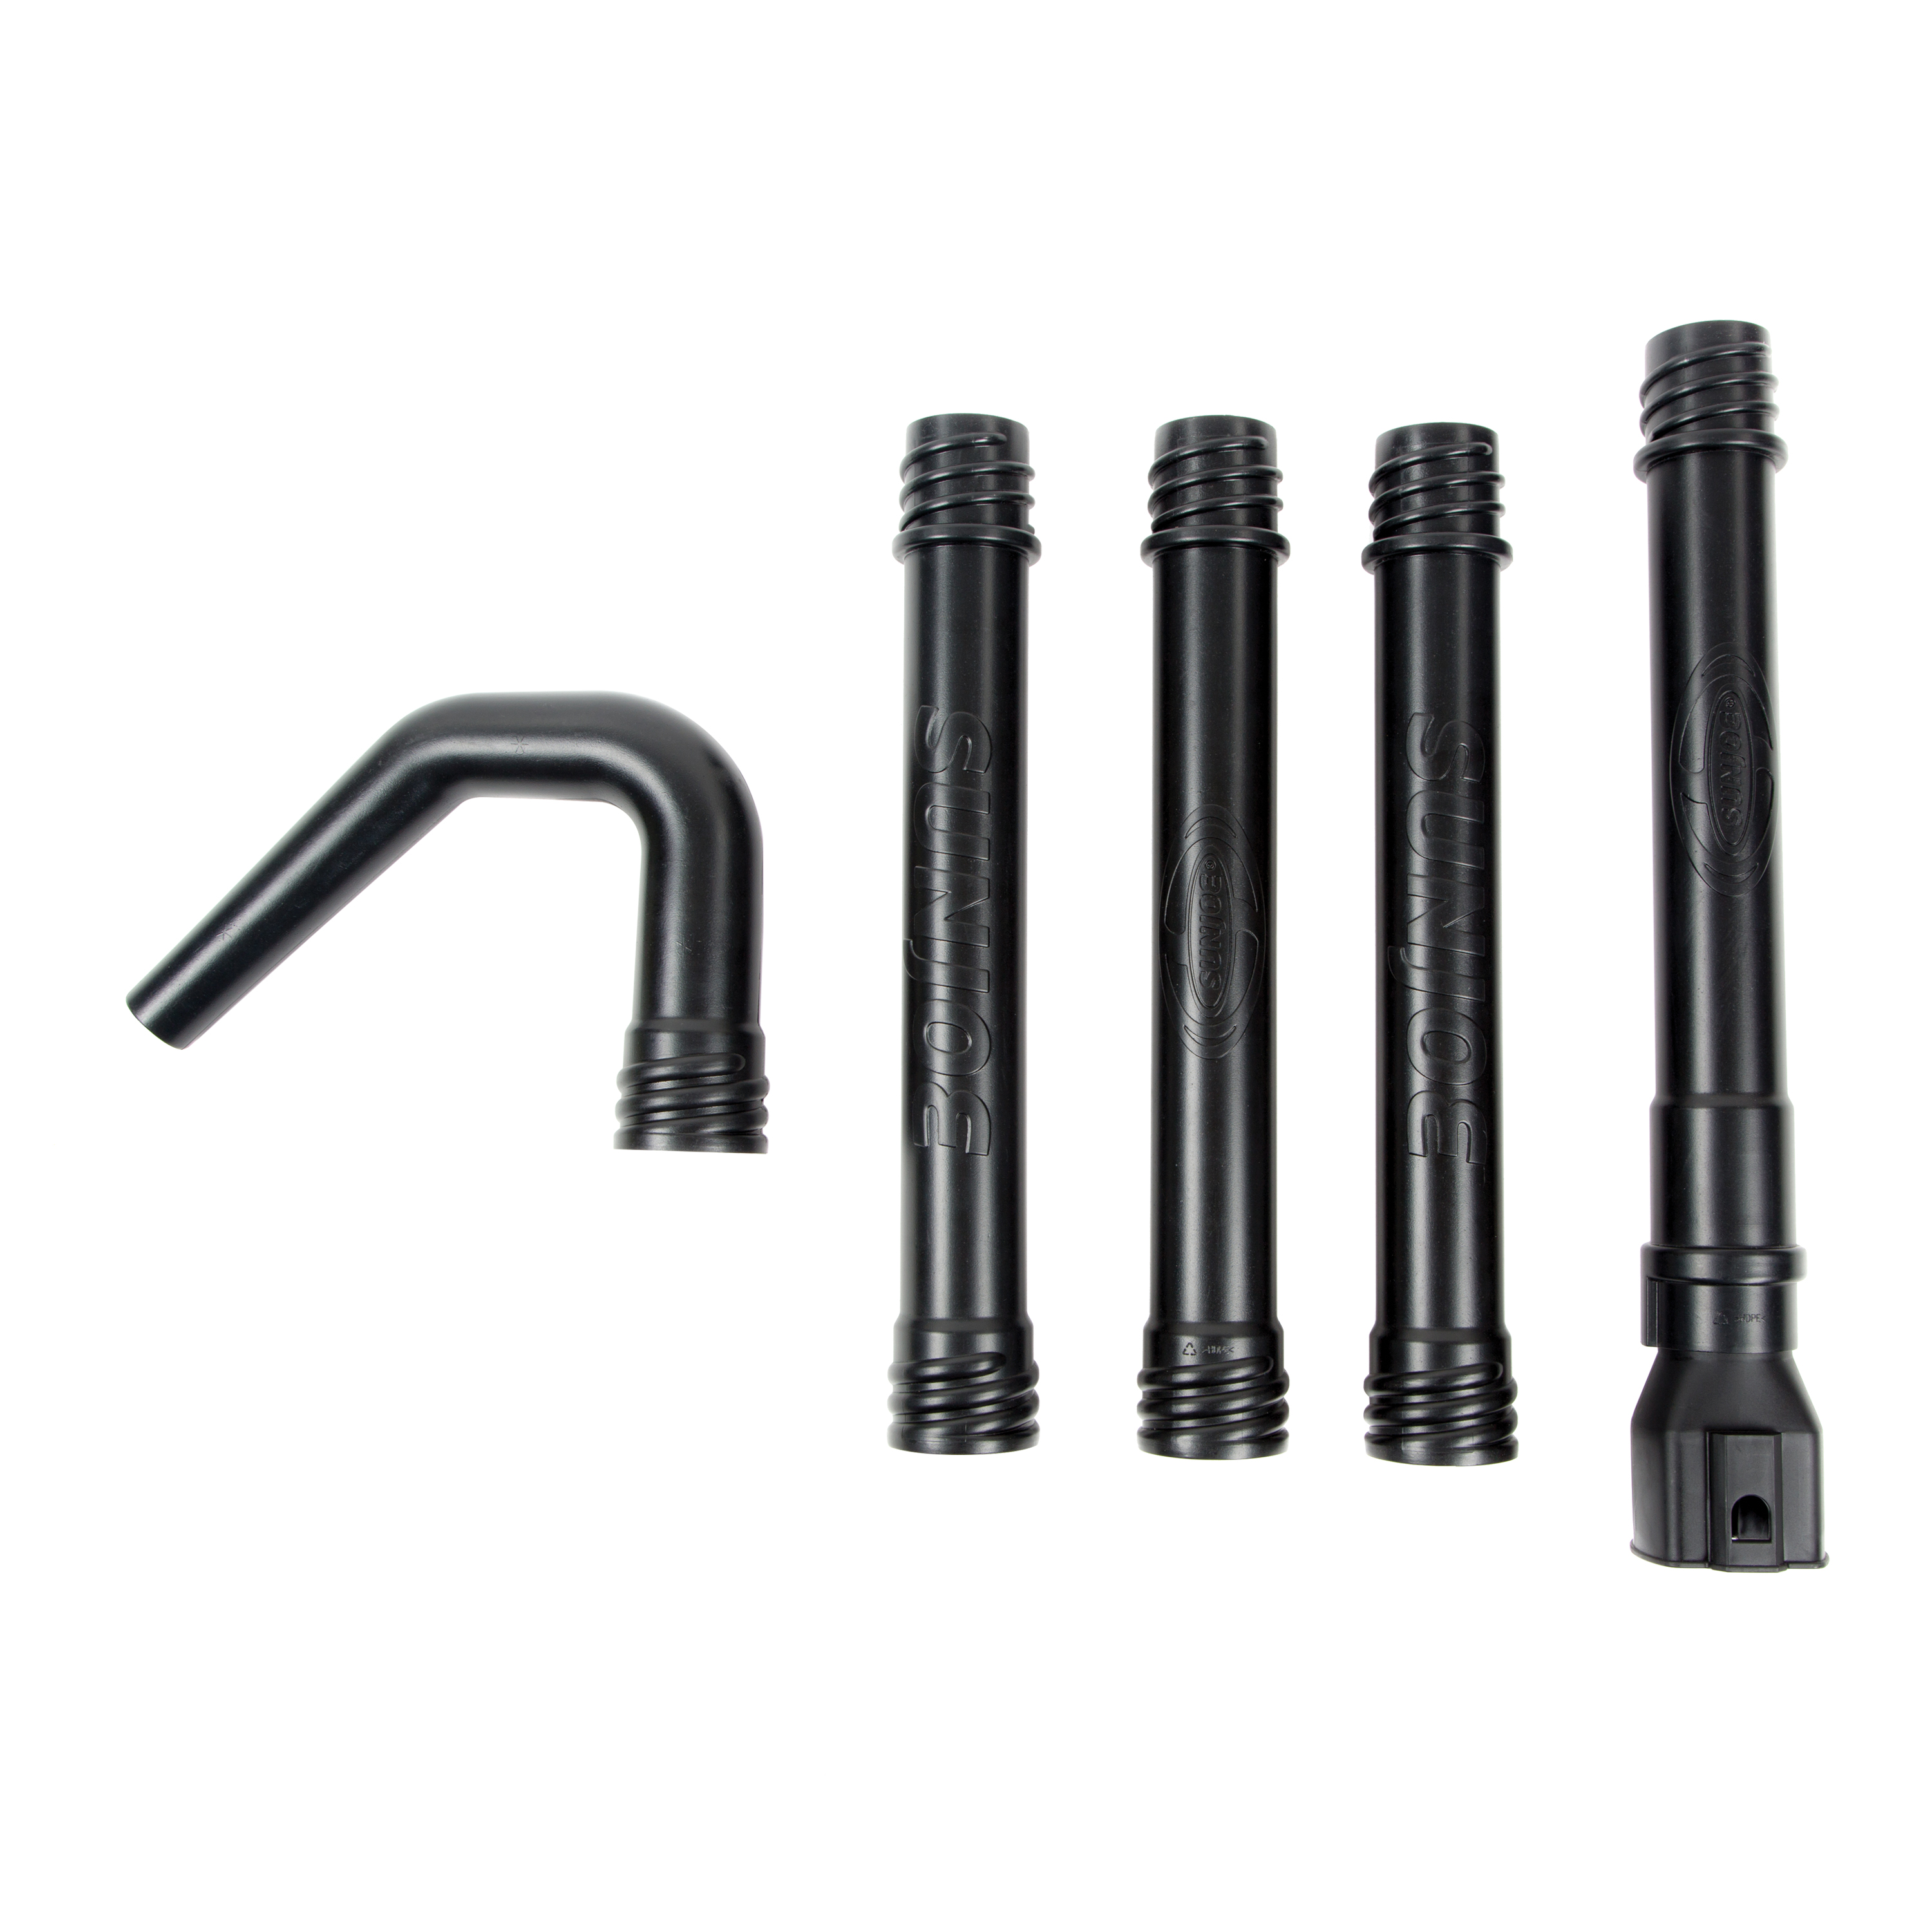  BLACK+DECKER Gutter Clean Attachment For Blower, Quick Connect  (BZOBL50) : Patio, Lawn & Garden